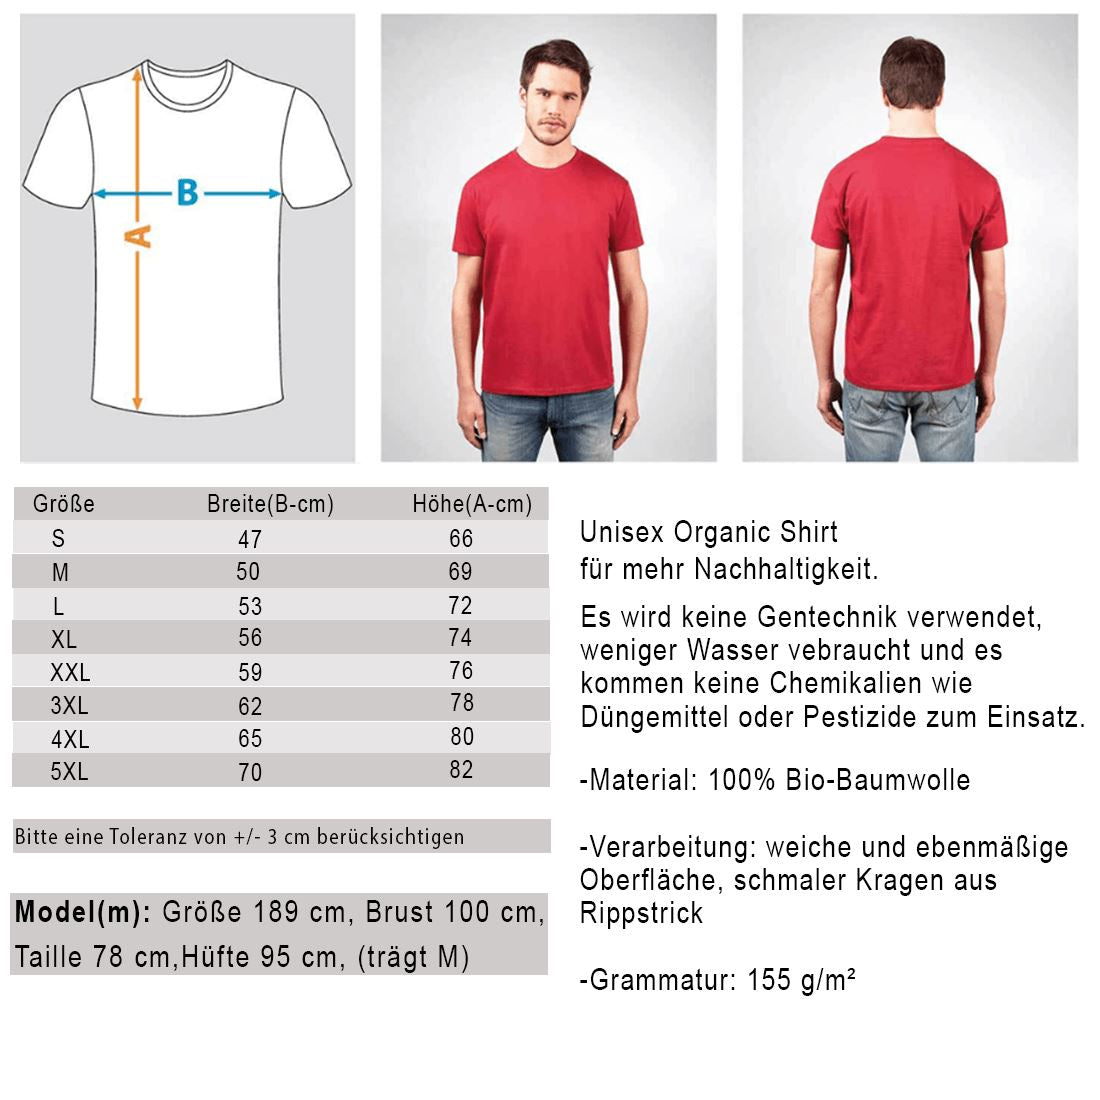 Bananciaga - Unisex Organic Shirt Rocker T-Shirt ST/ST Shirtee 